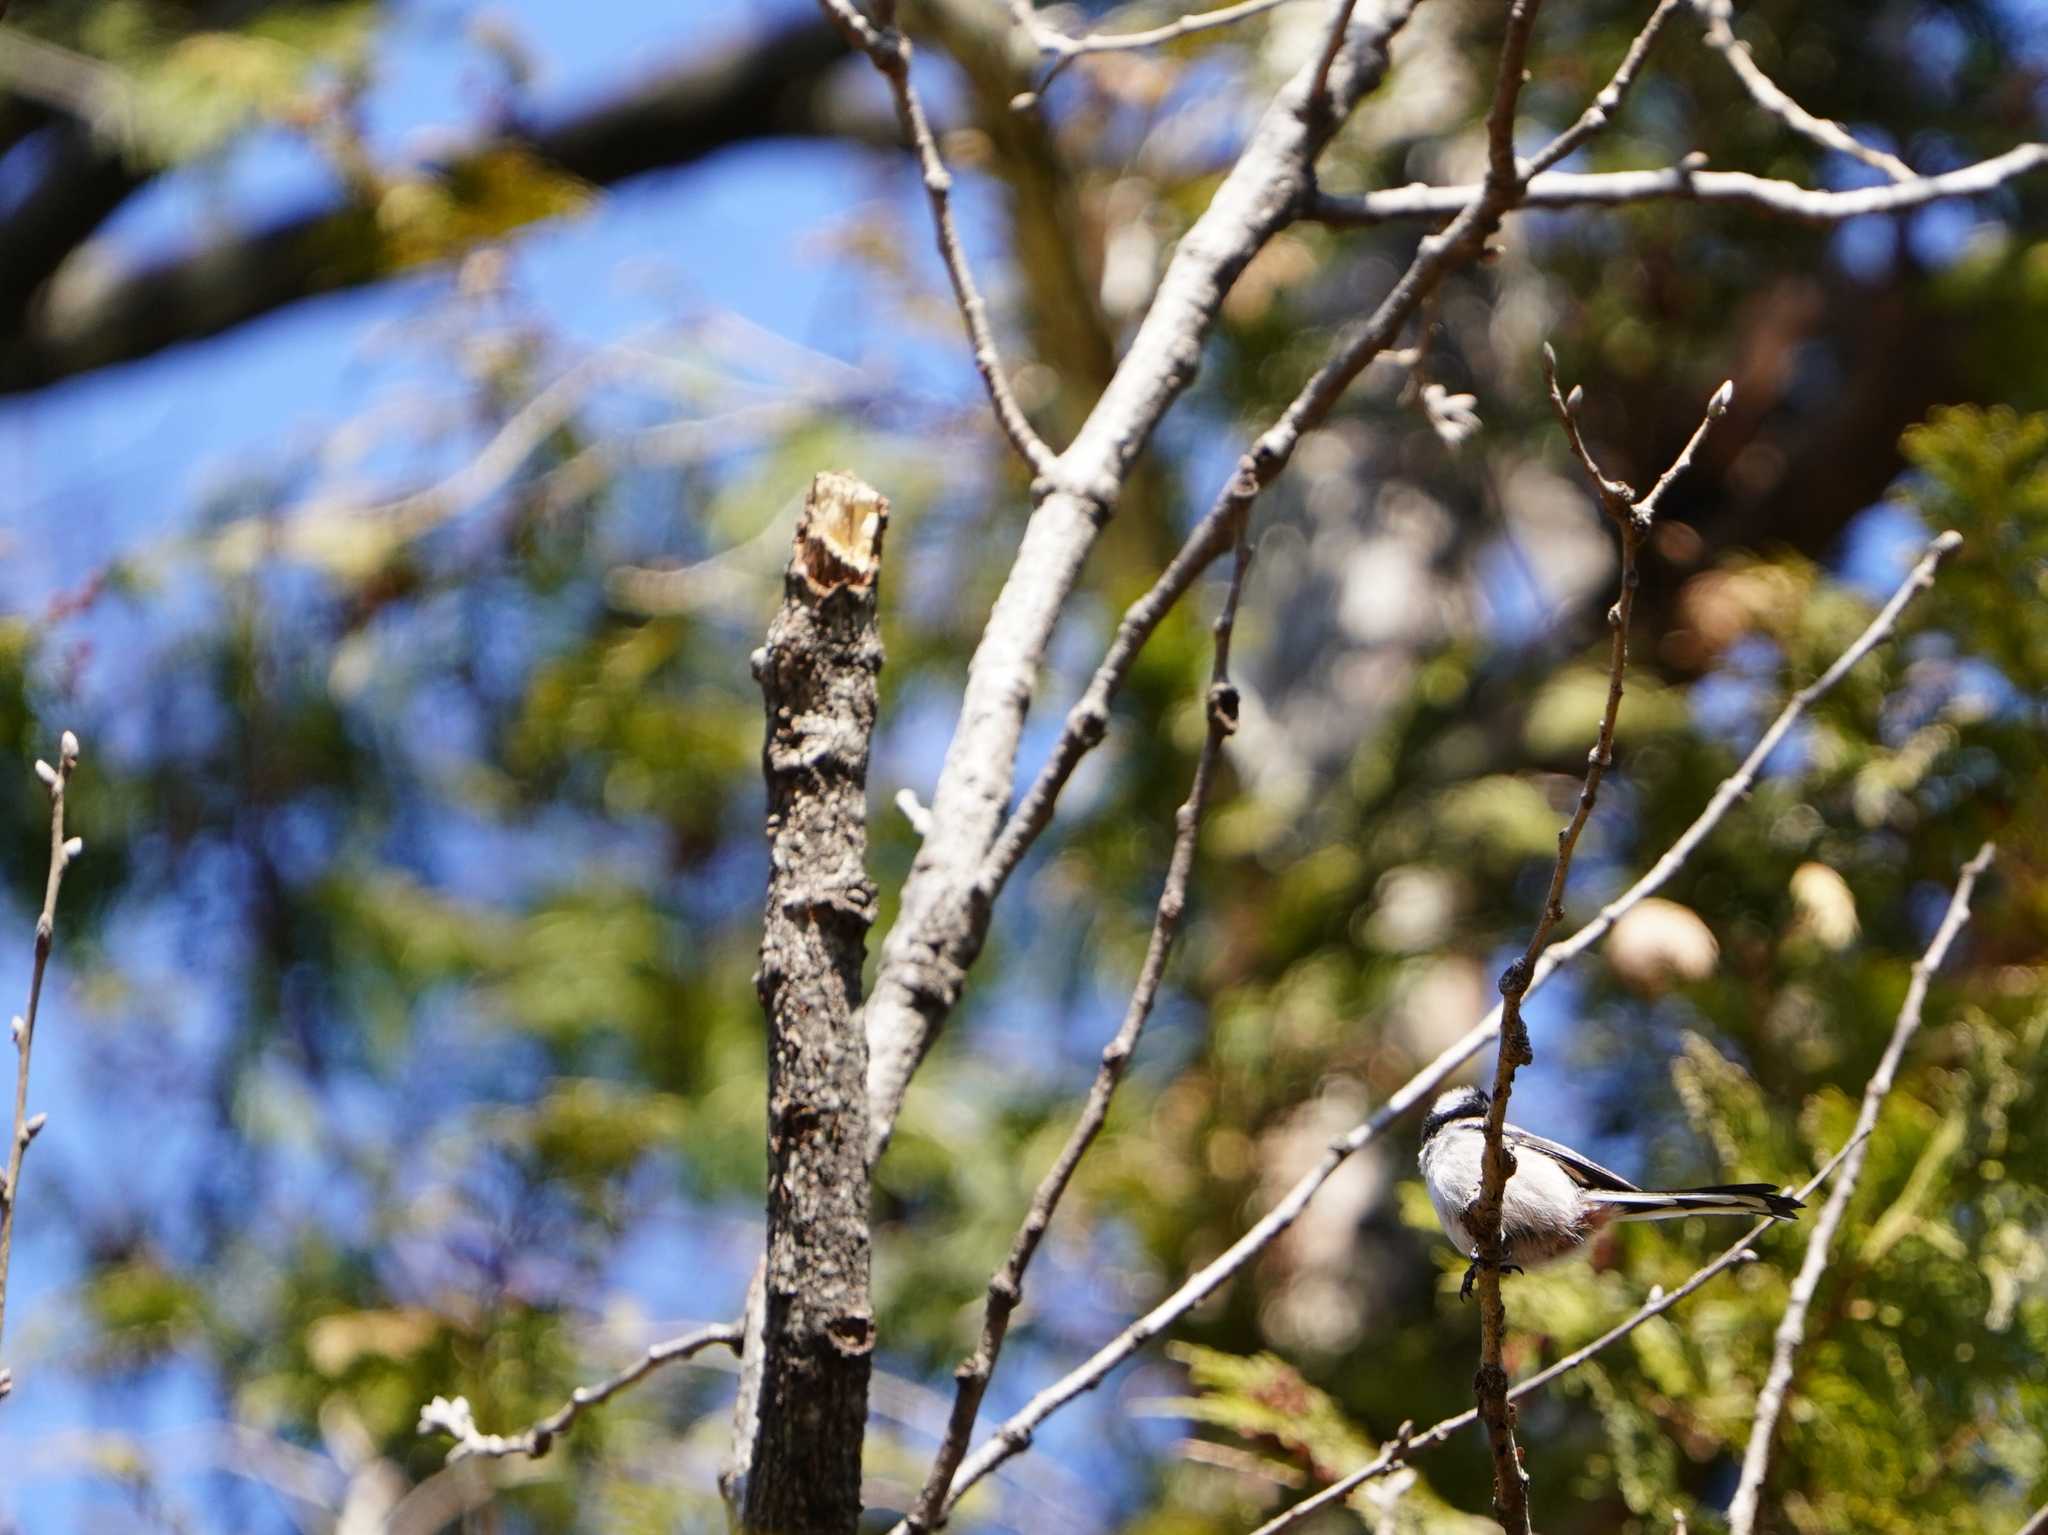 Photo of Long-tailed Tit at Kodomo Shizen Park by tacya2